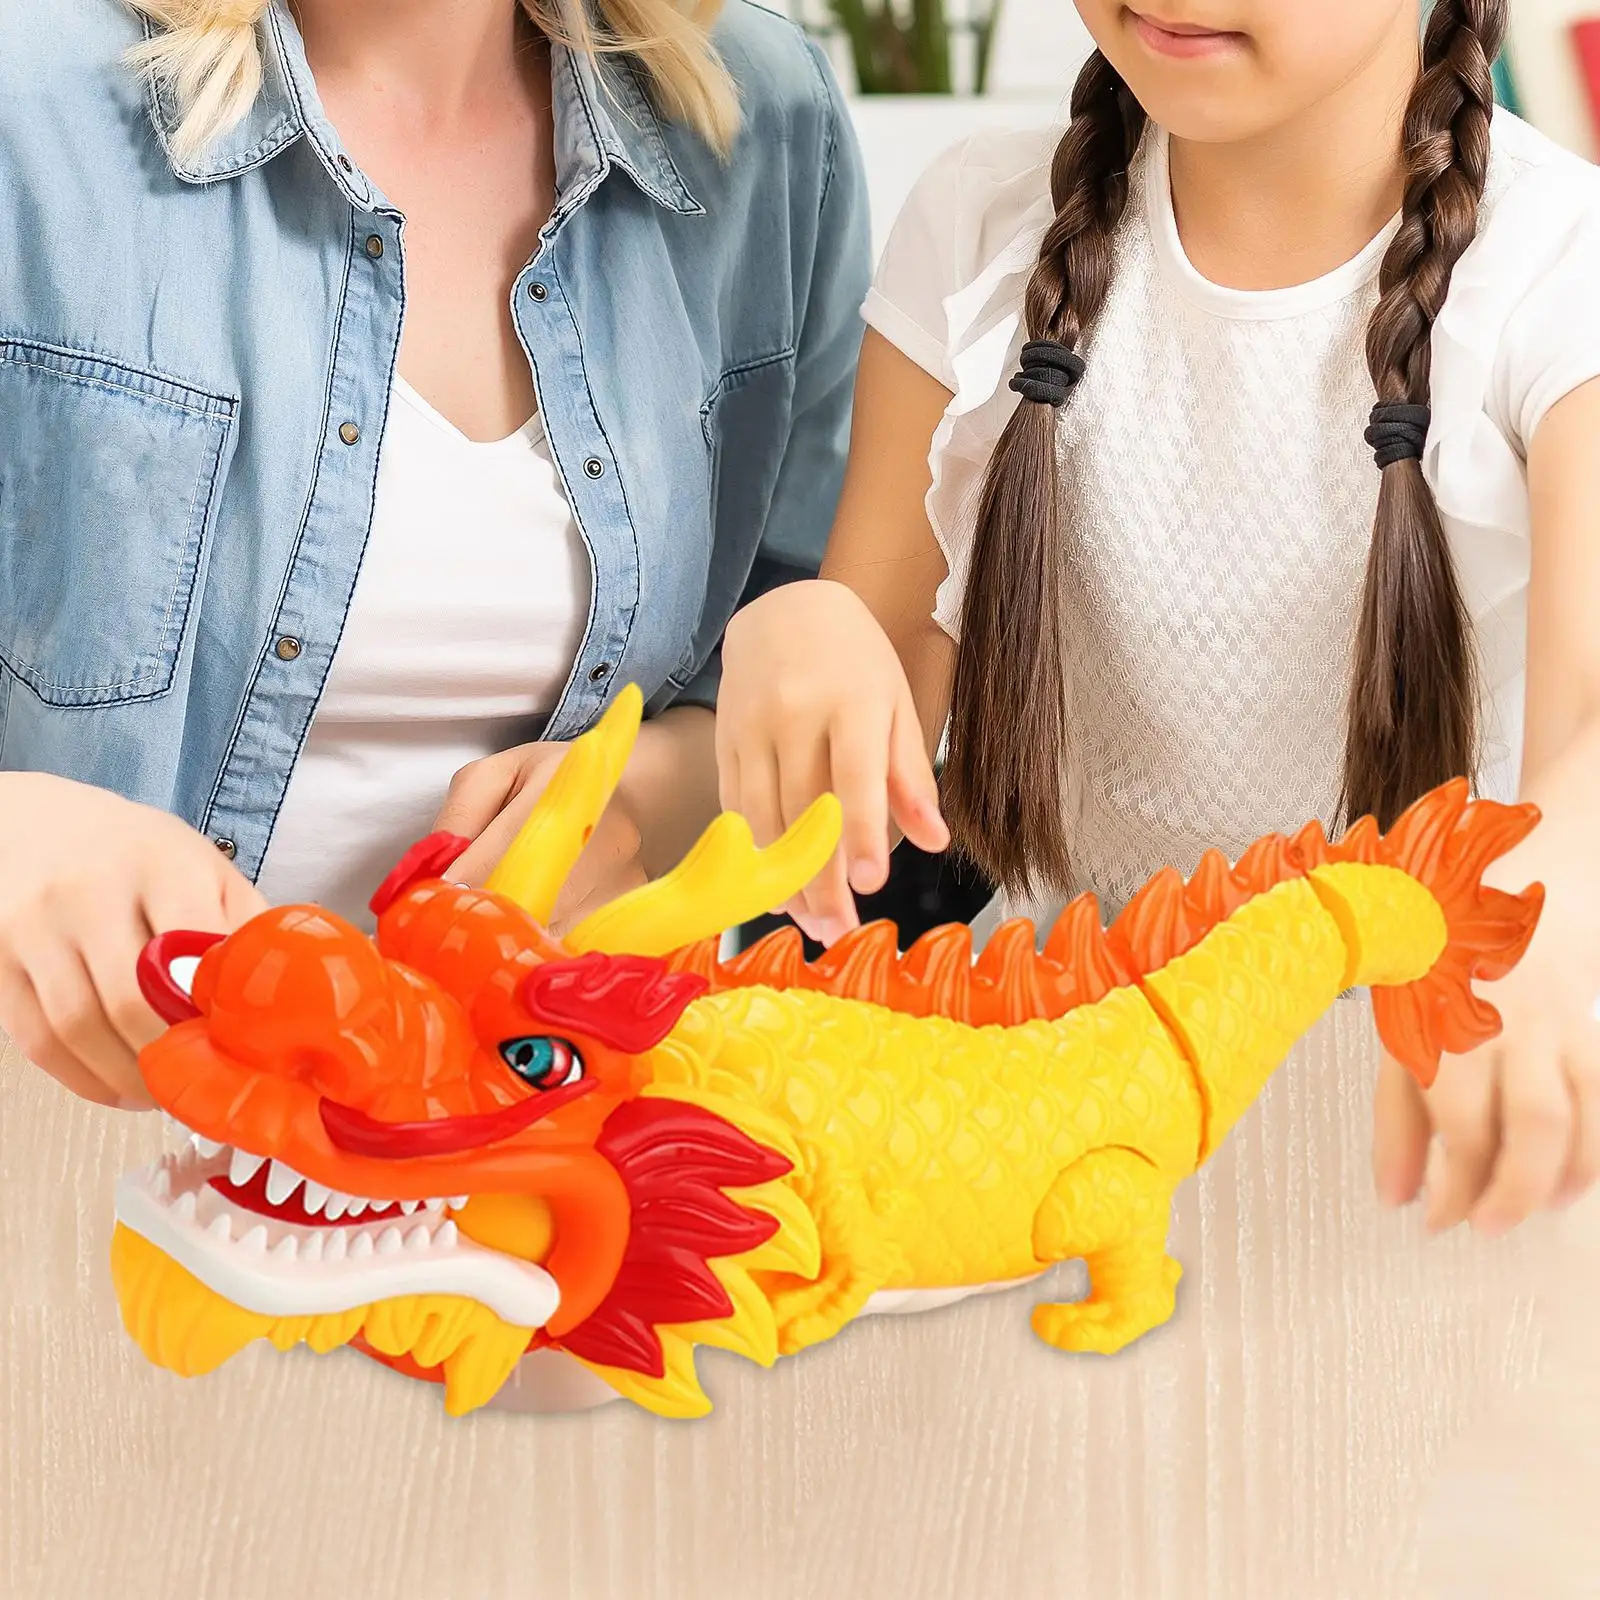 Eletric Dragon Toy Gifts Novelty Animal Mechanical Walking Realistic Bathroom Flexible for Girls Children Age 8-12 Boys Kid